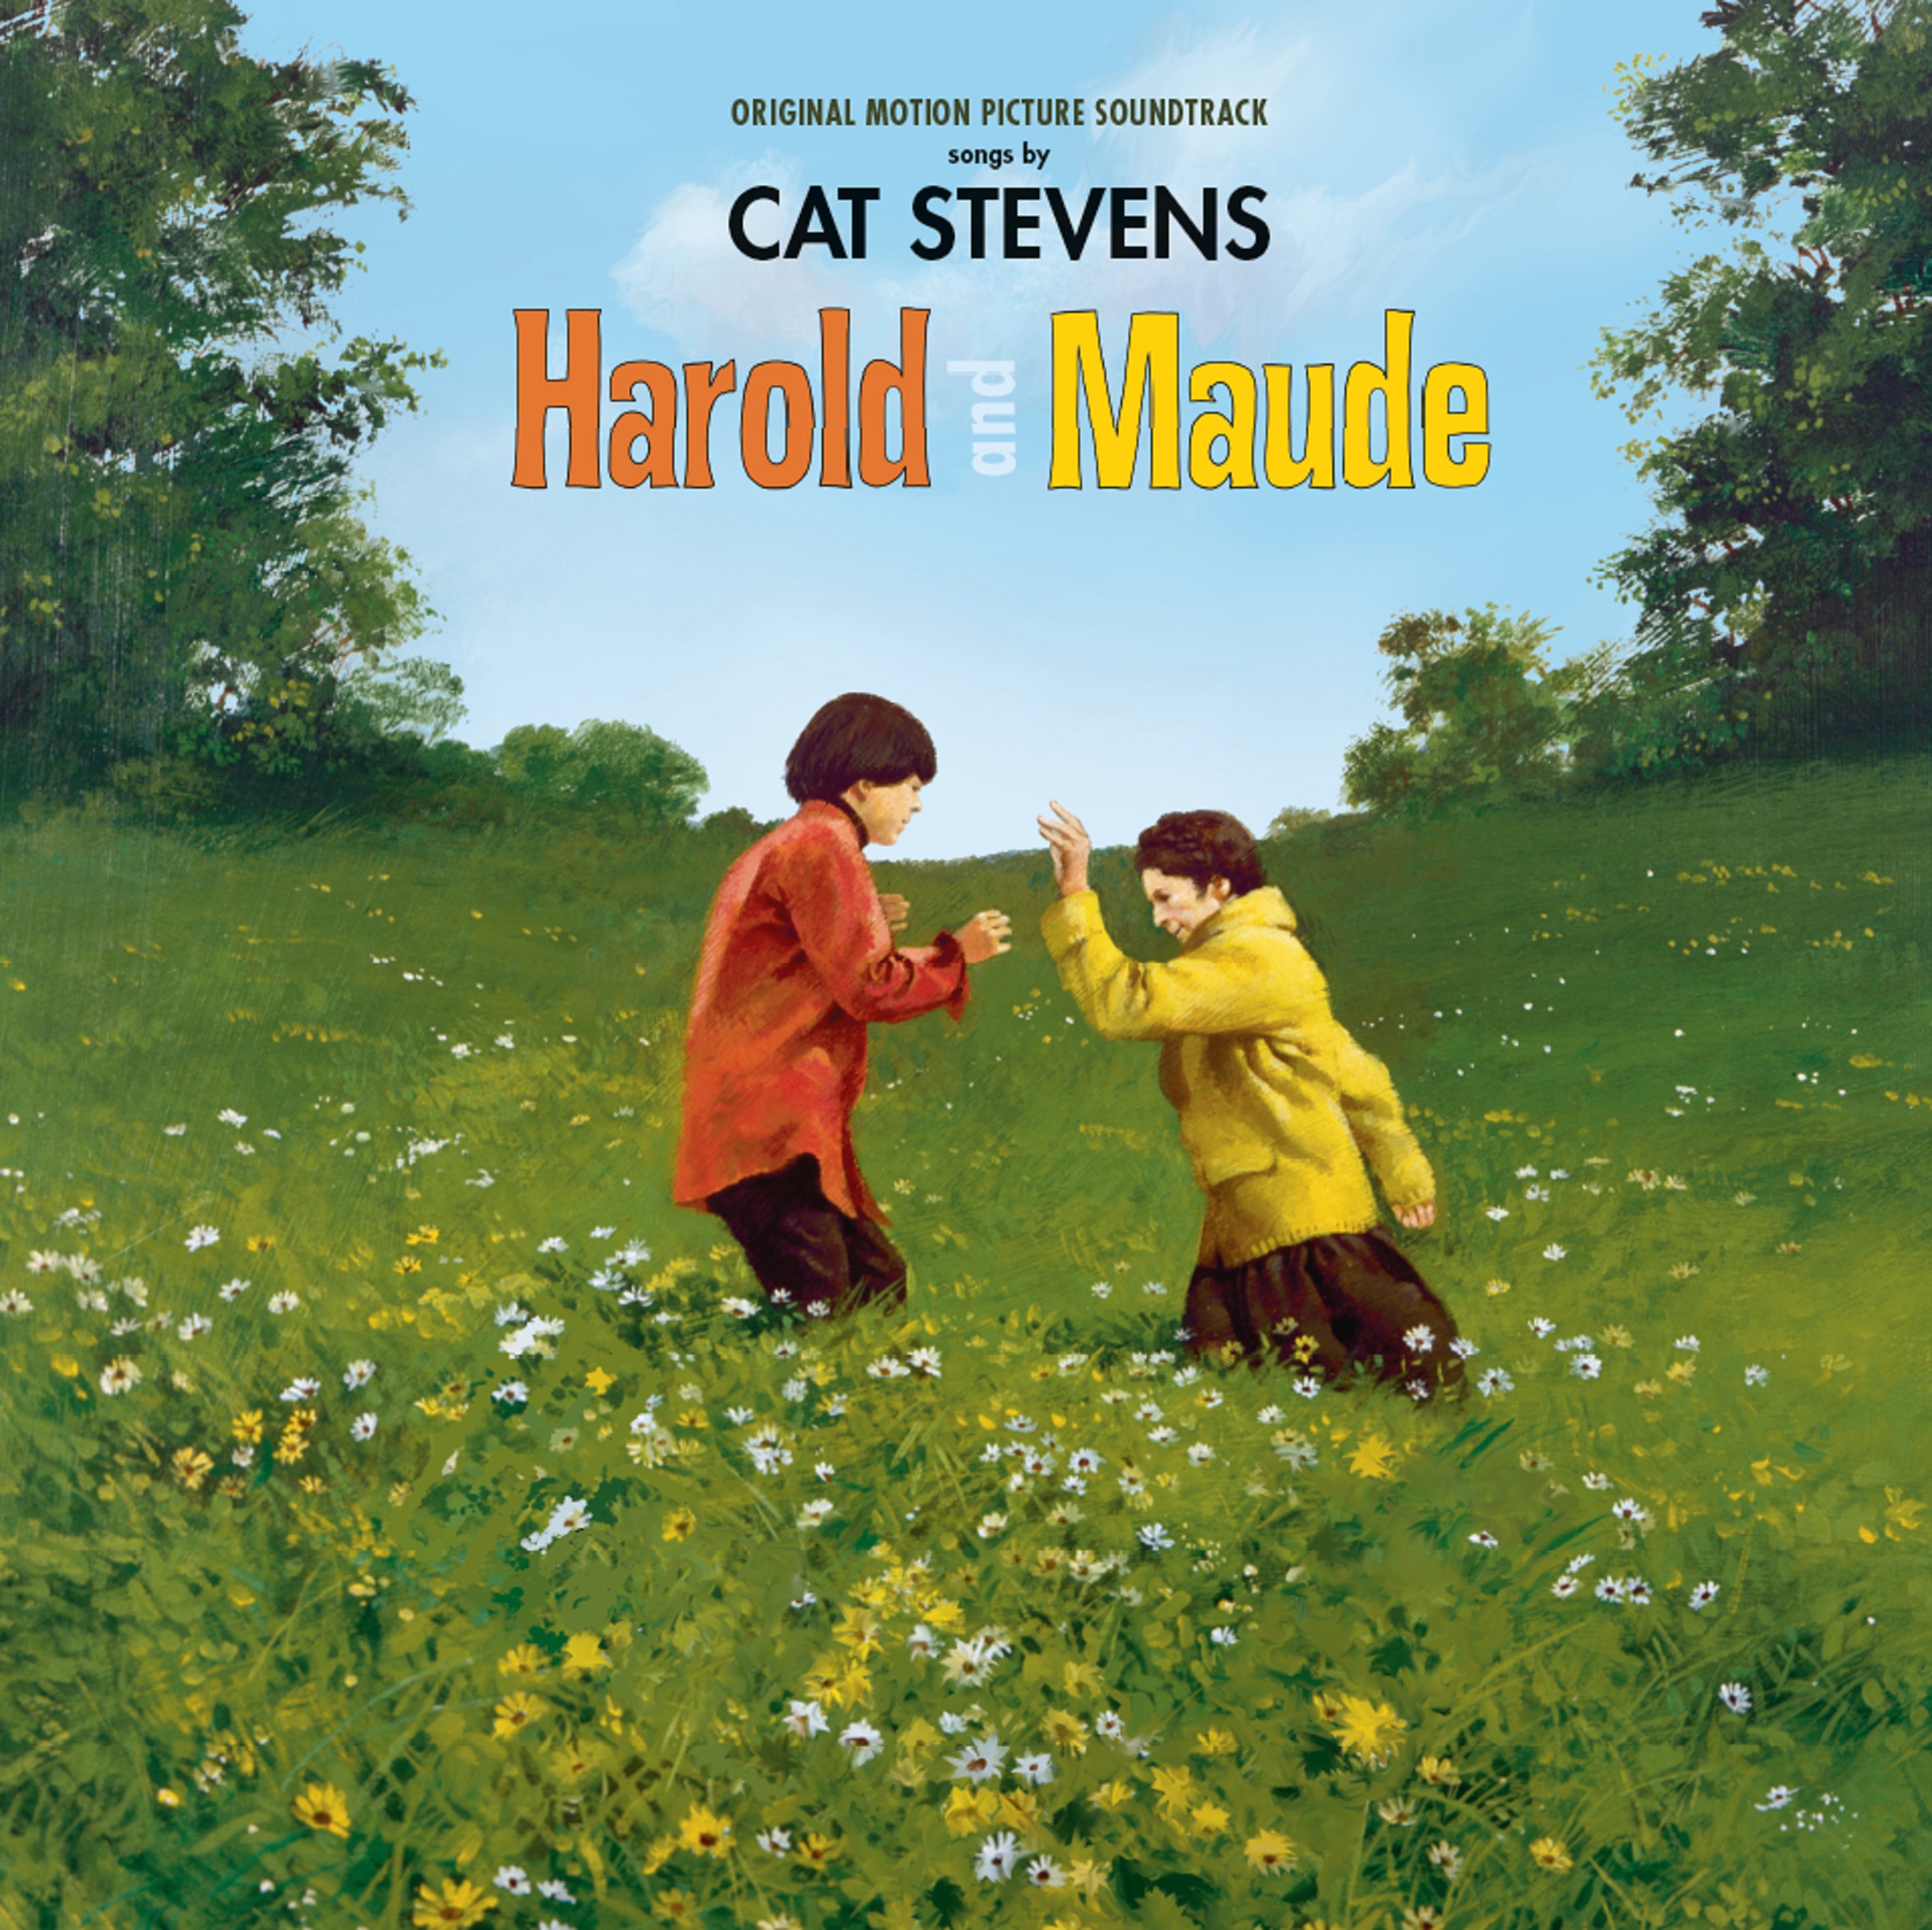 Yusuf/Cat Stevens' "Harold And Maude" (Original Motion Picture Soundtrack) 50th Anniversary Edition